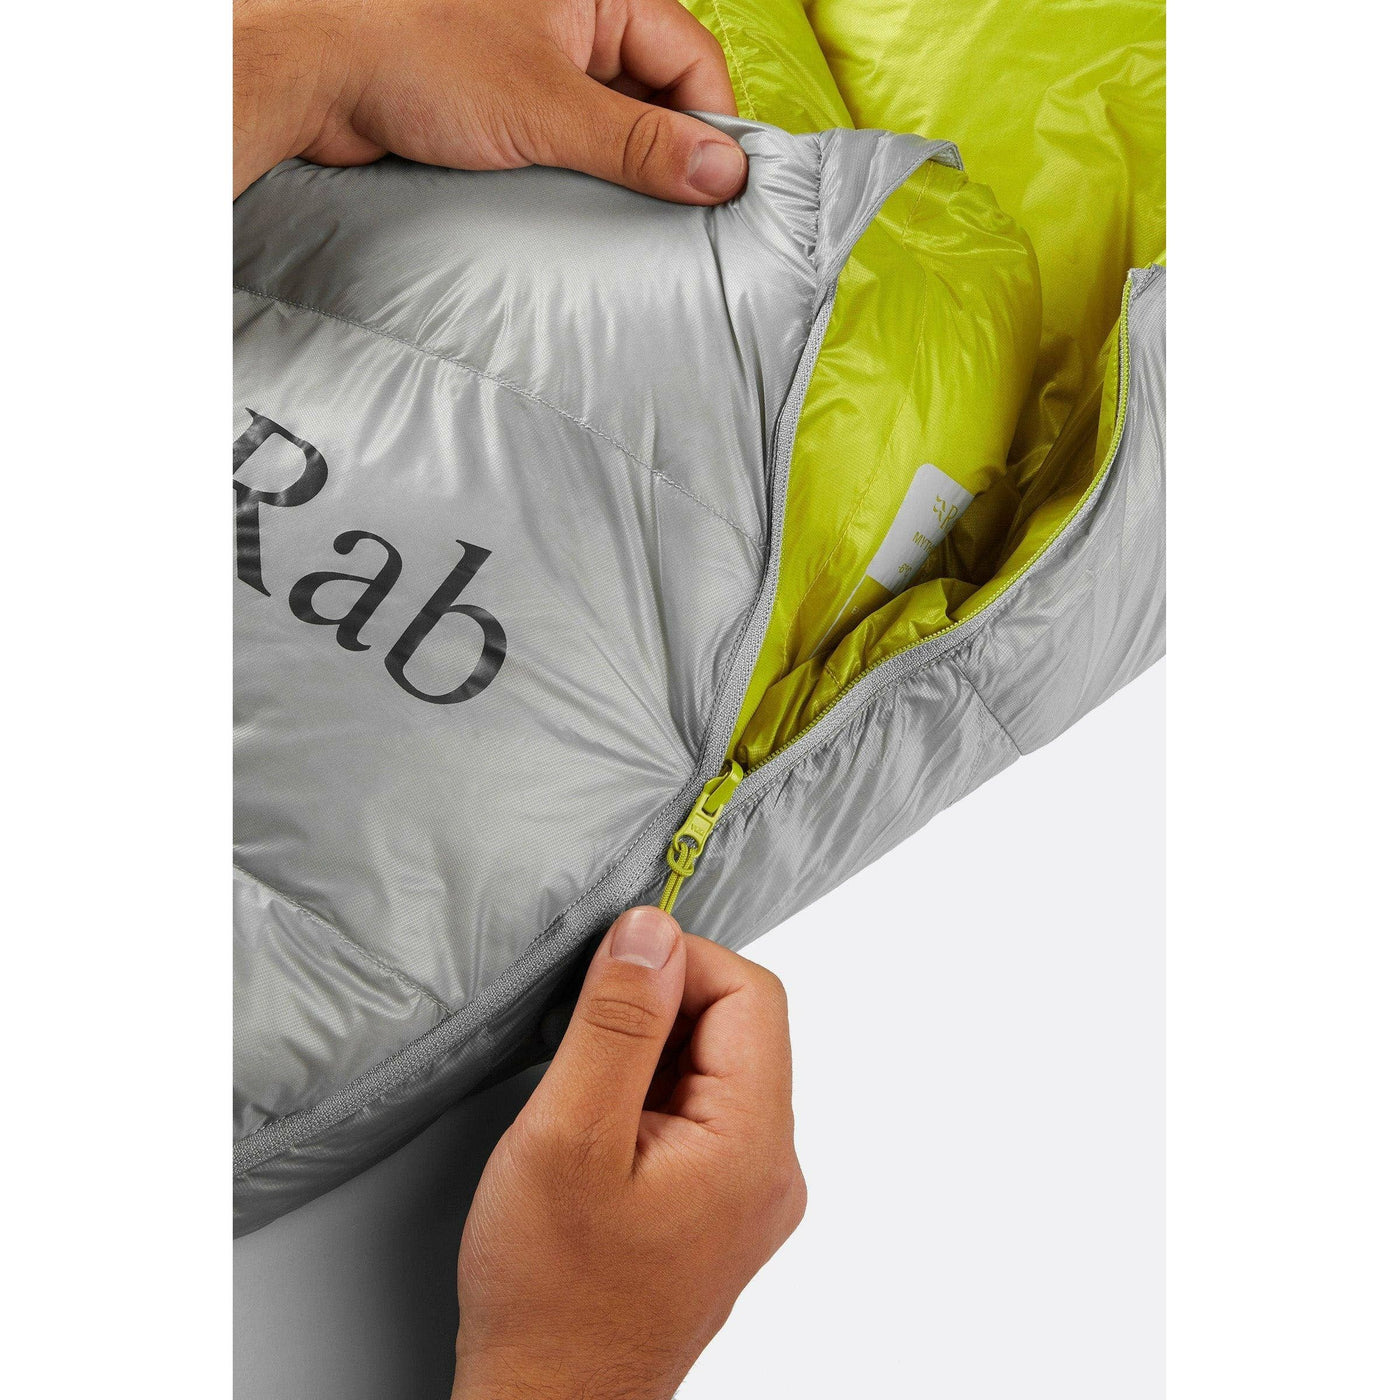 Rab Mythic 400 -6 Sleeping Bag (660 Grams)